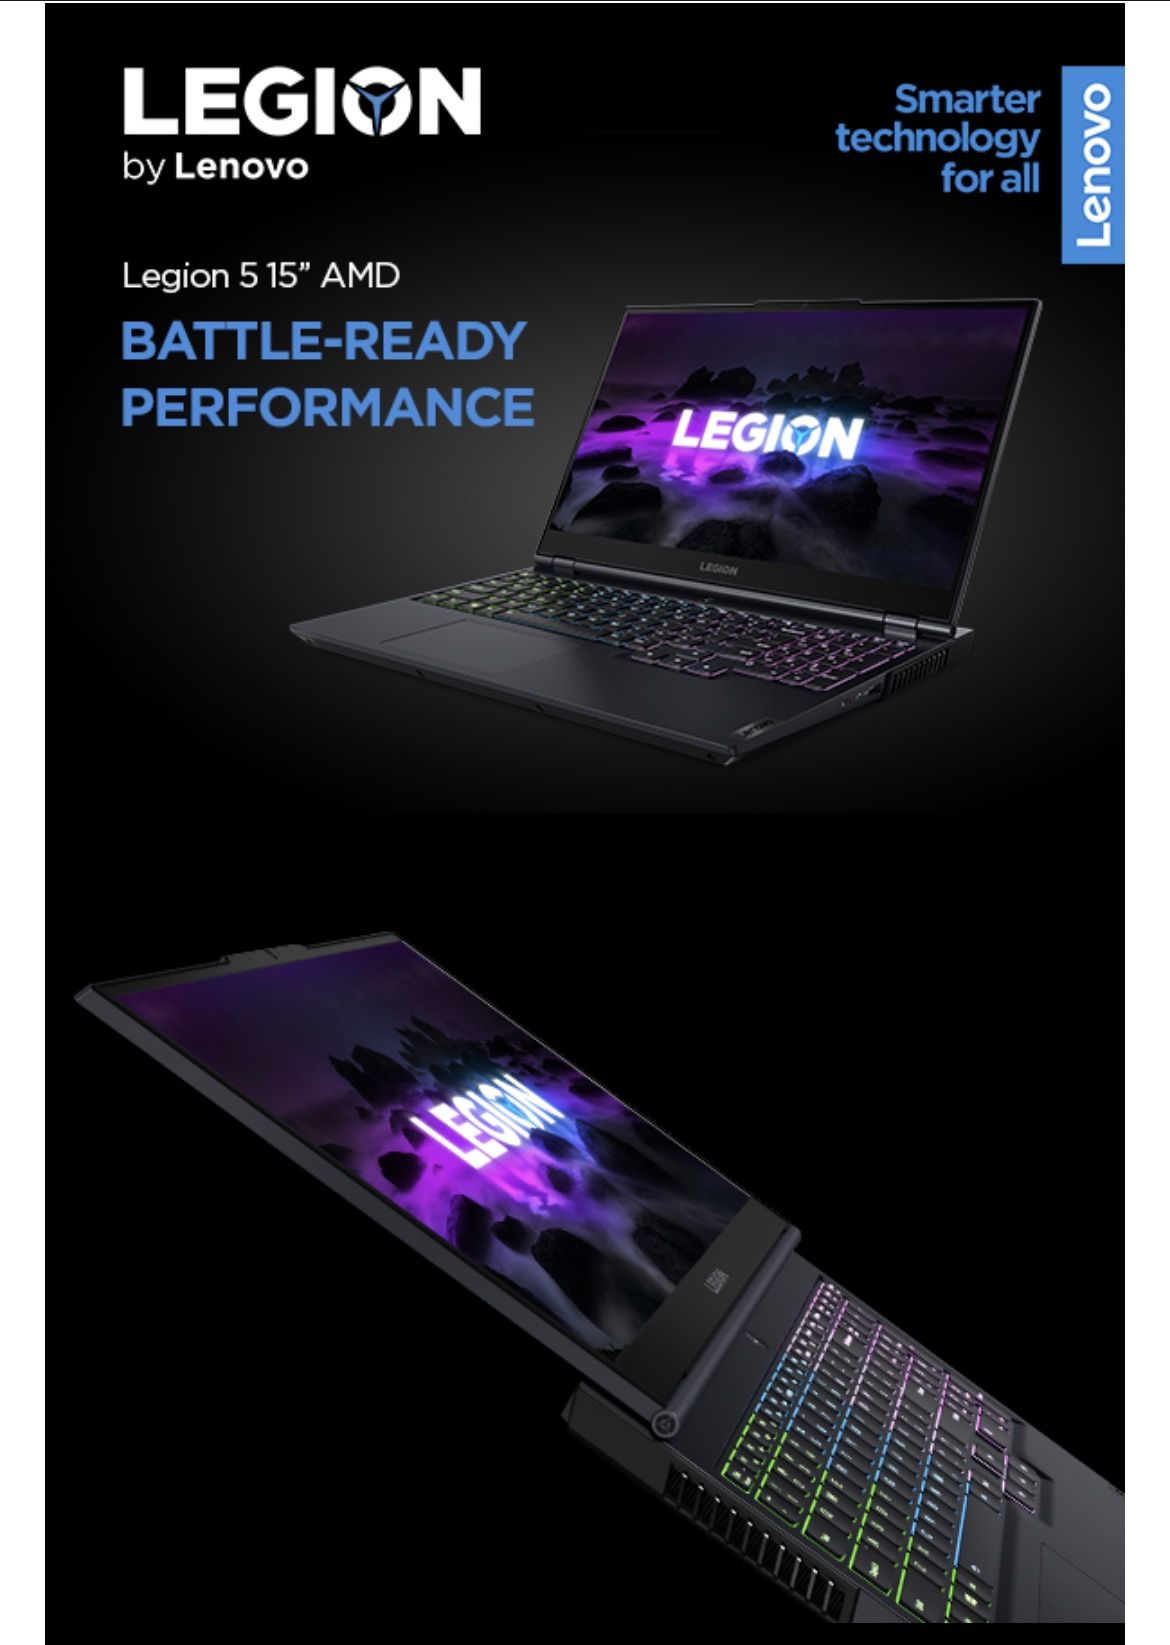 Lenovo Legion Gaming Laptop